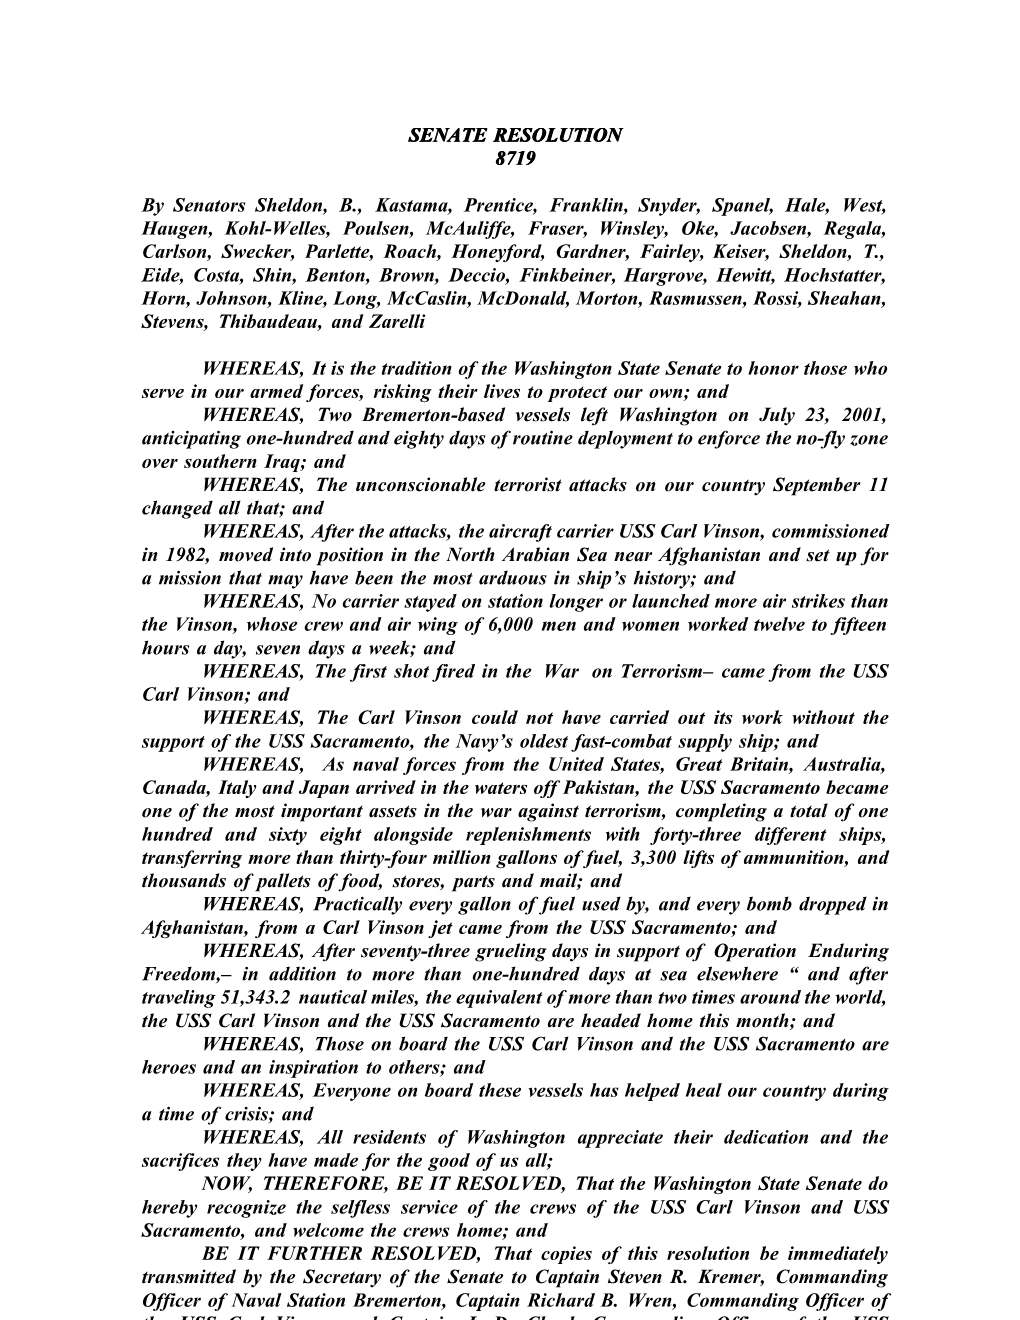 SENATE RESOLUTION 8719 by Senators Sheldon, B., Kastama